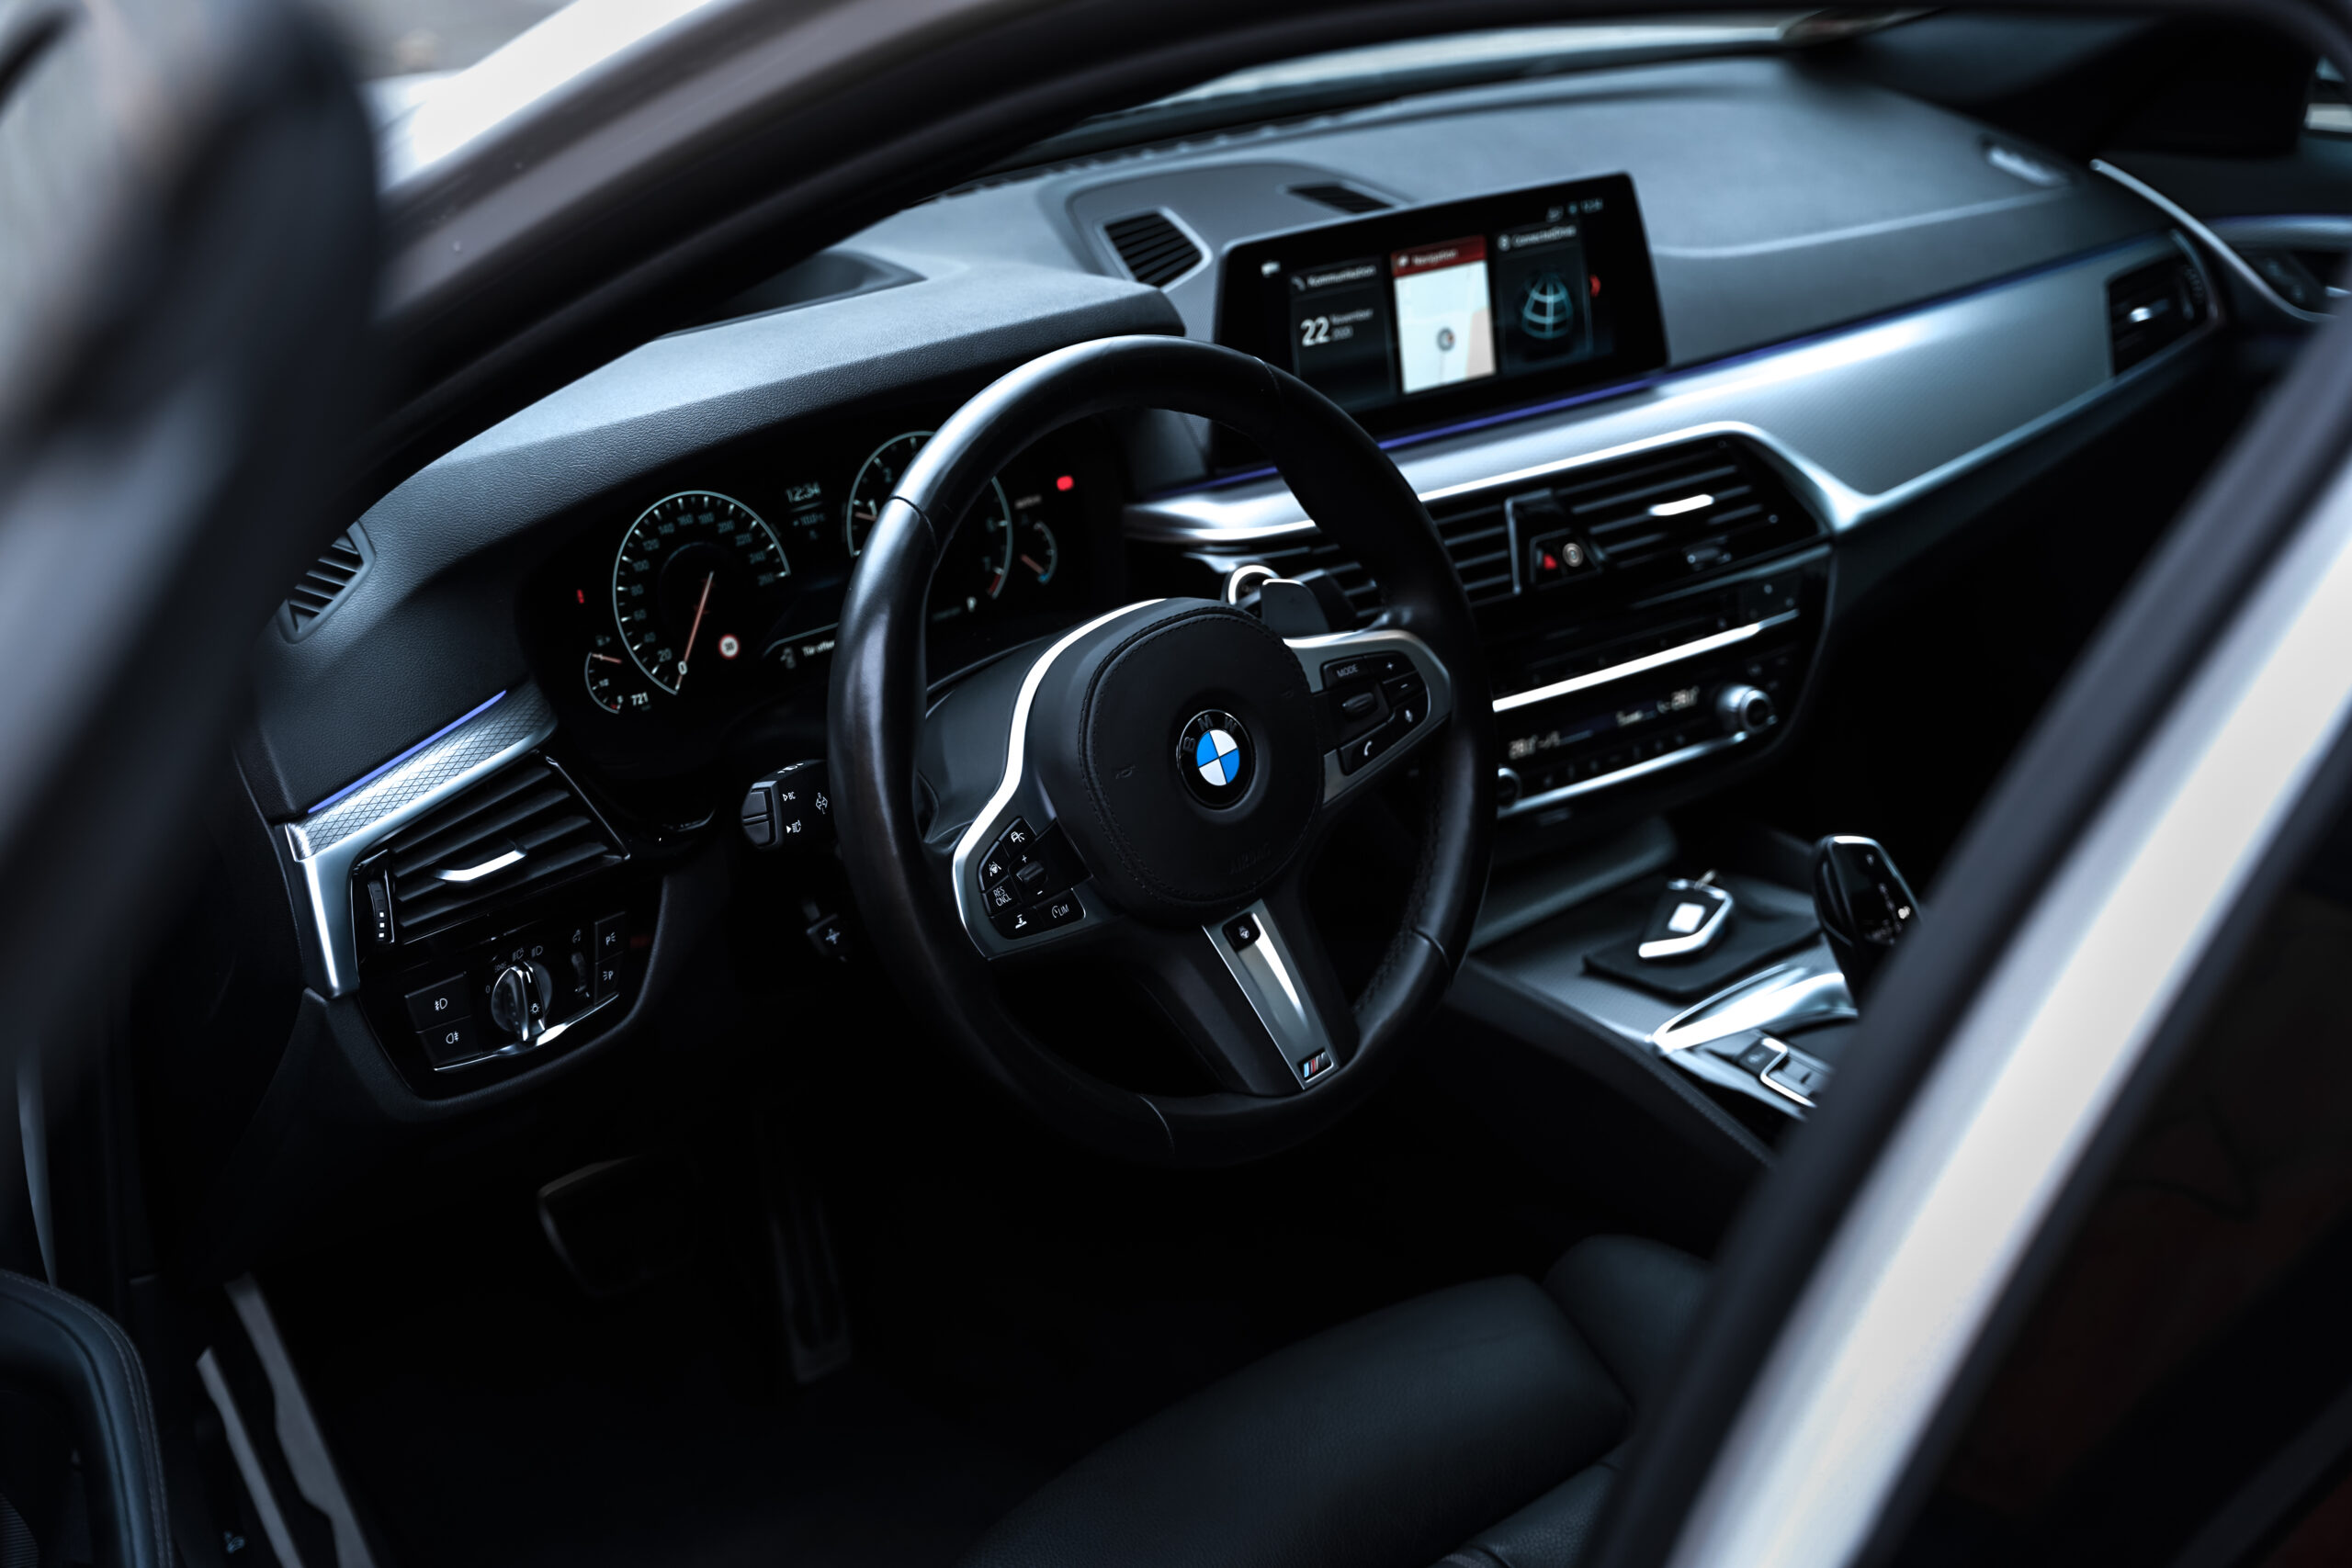 BMW 520i innenausstattung